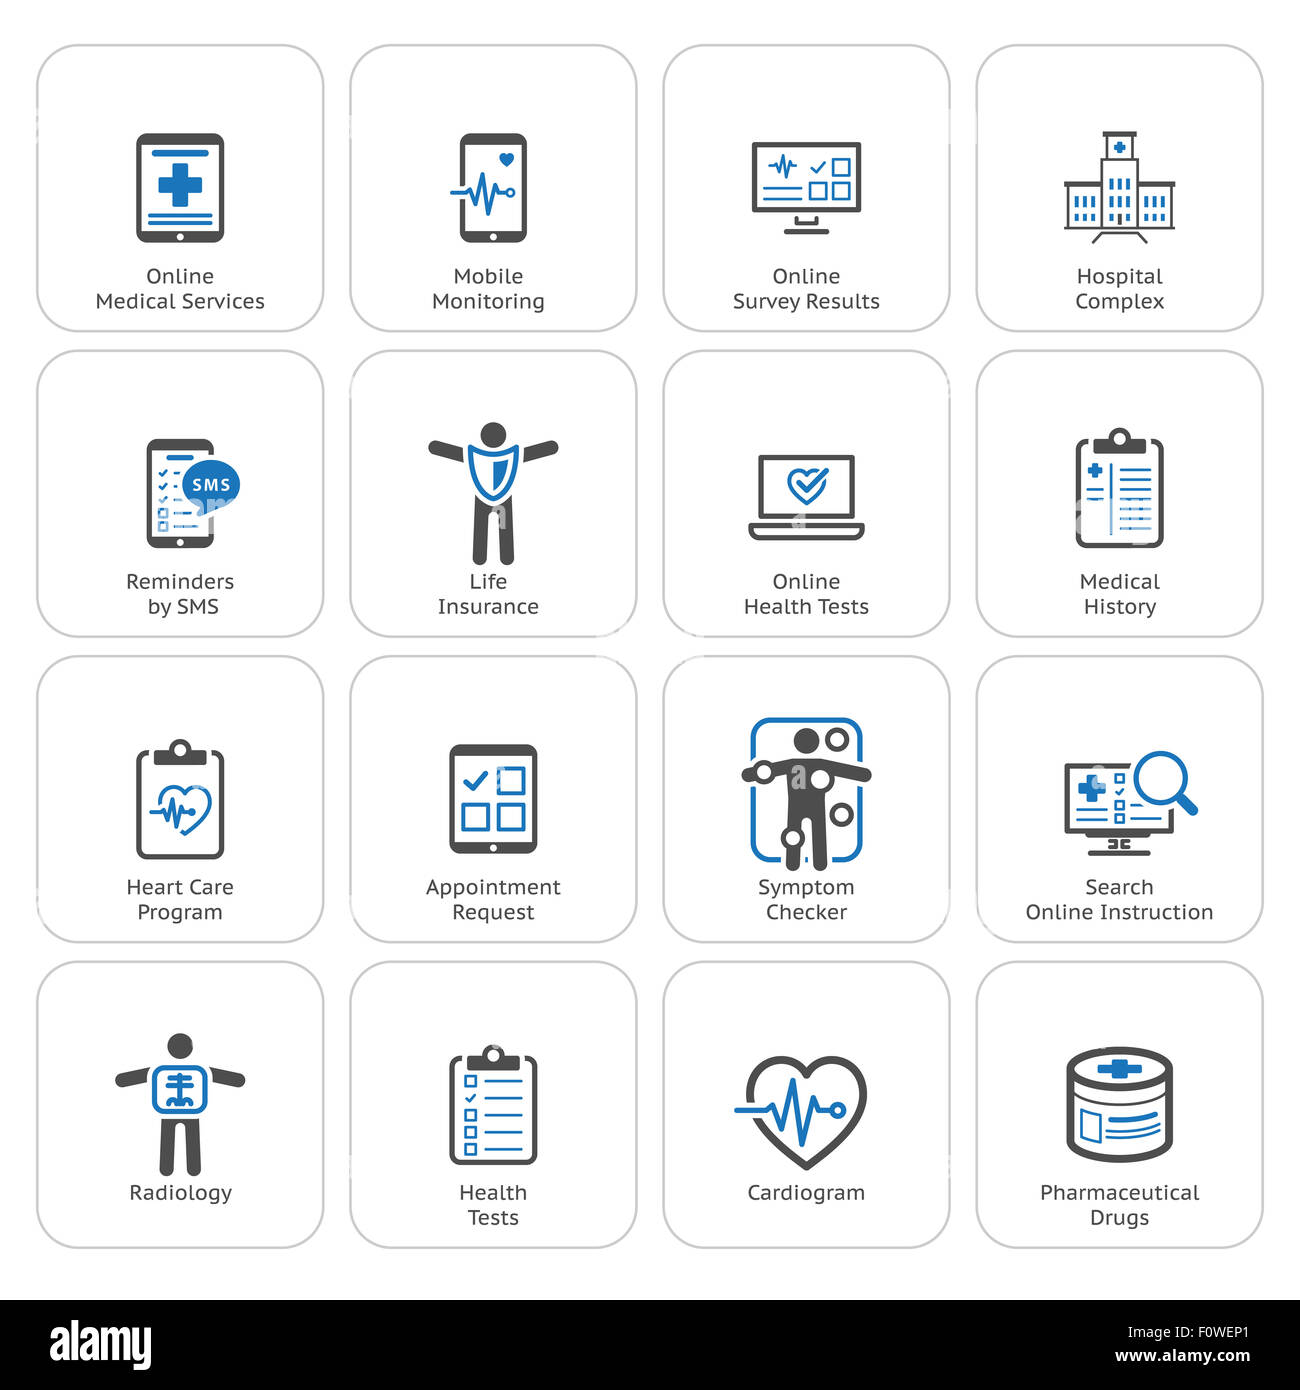 Medical & Health Care Icons Set. Flat Design. Isolated. Stock Photo